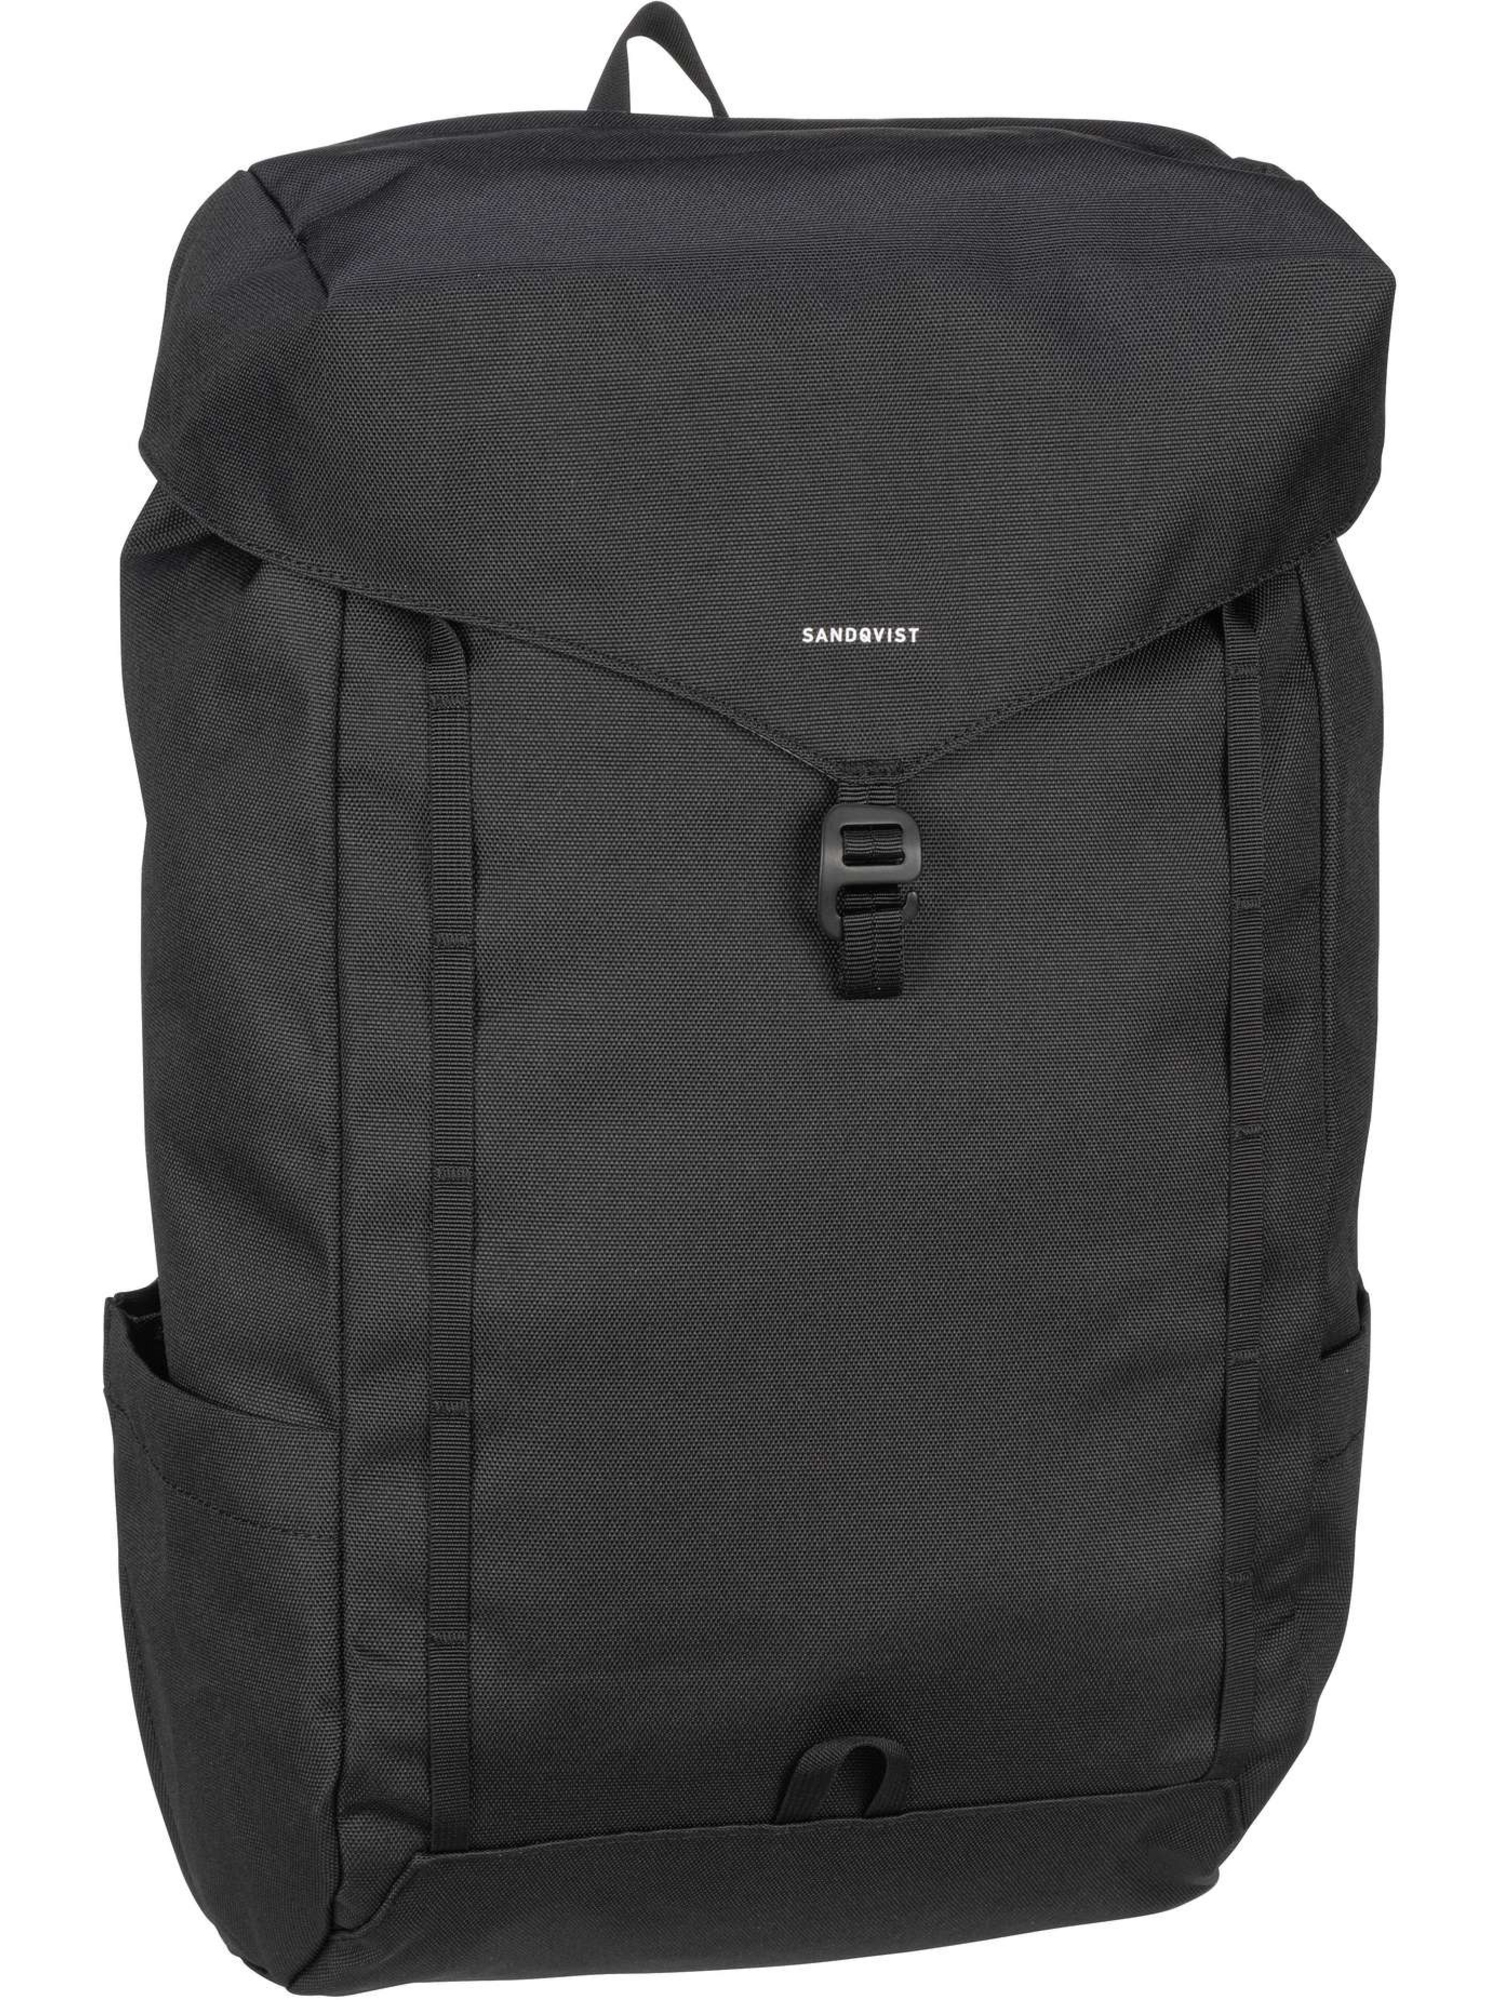 Рюкзак SANDQVIST/Backpack Walter Backpack, черный рюкзак sandqvist walter оливковый размер one size